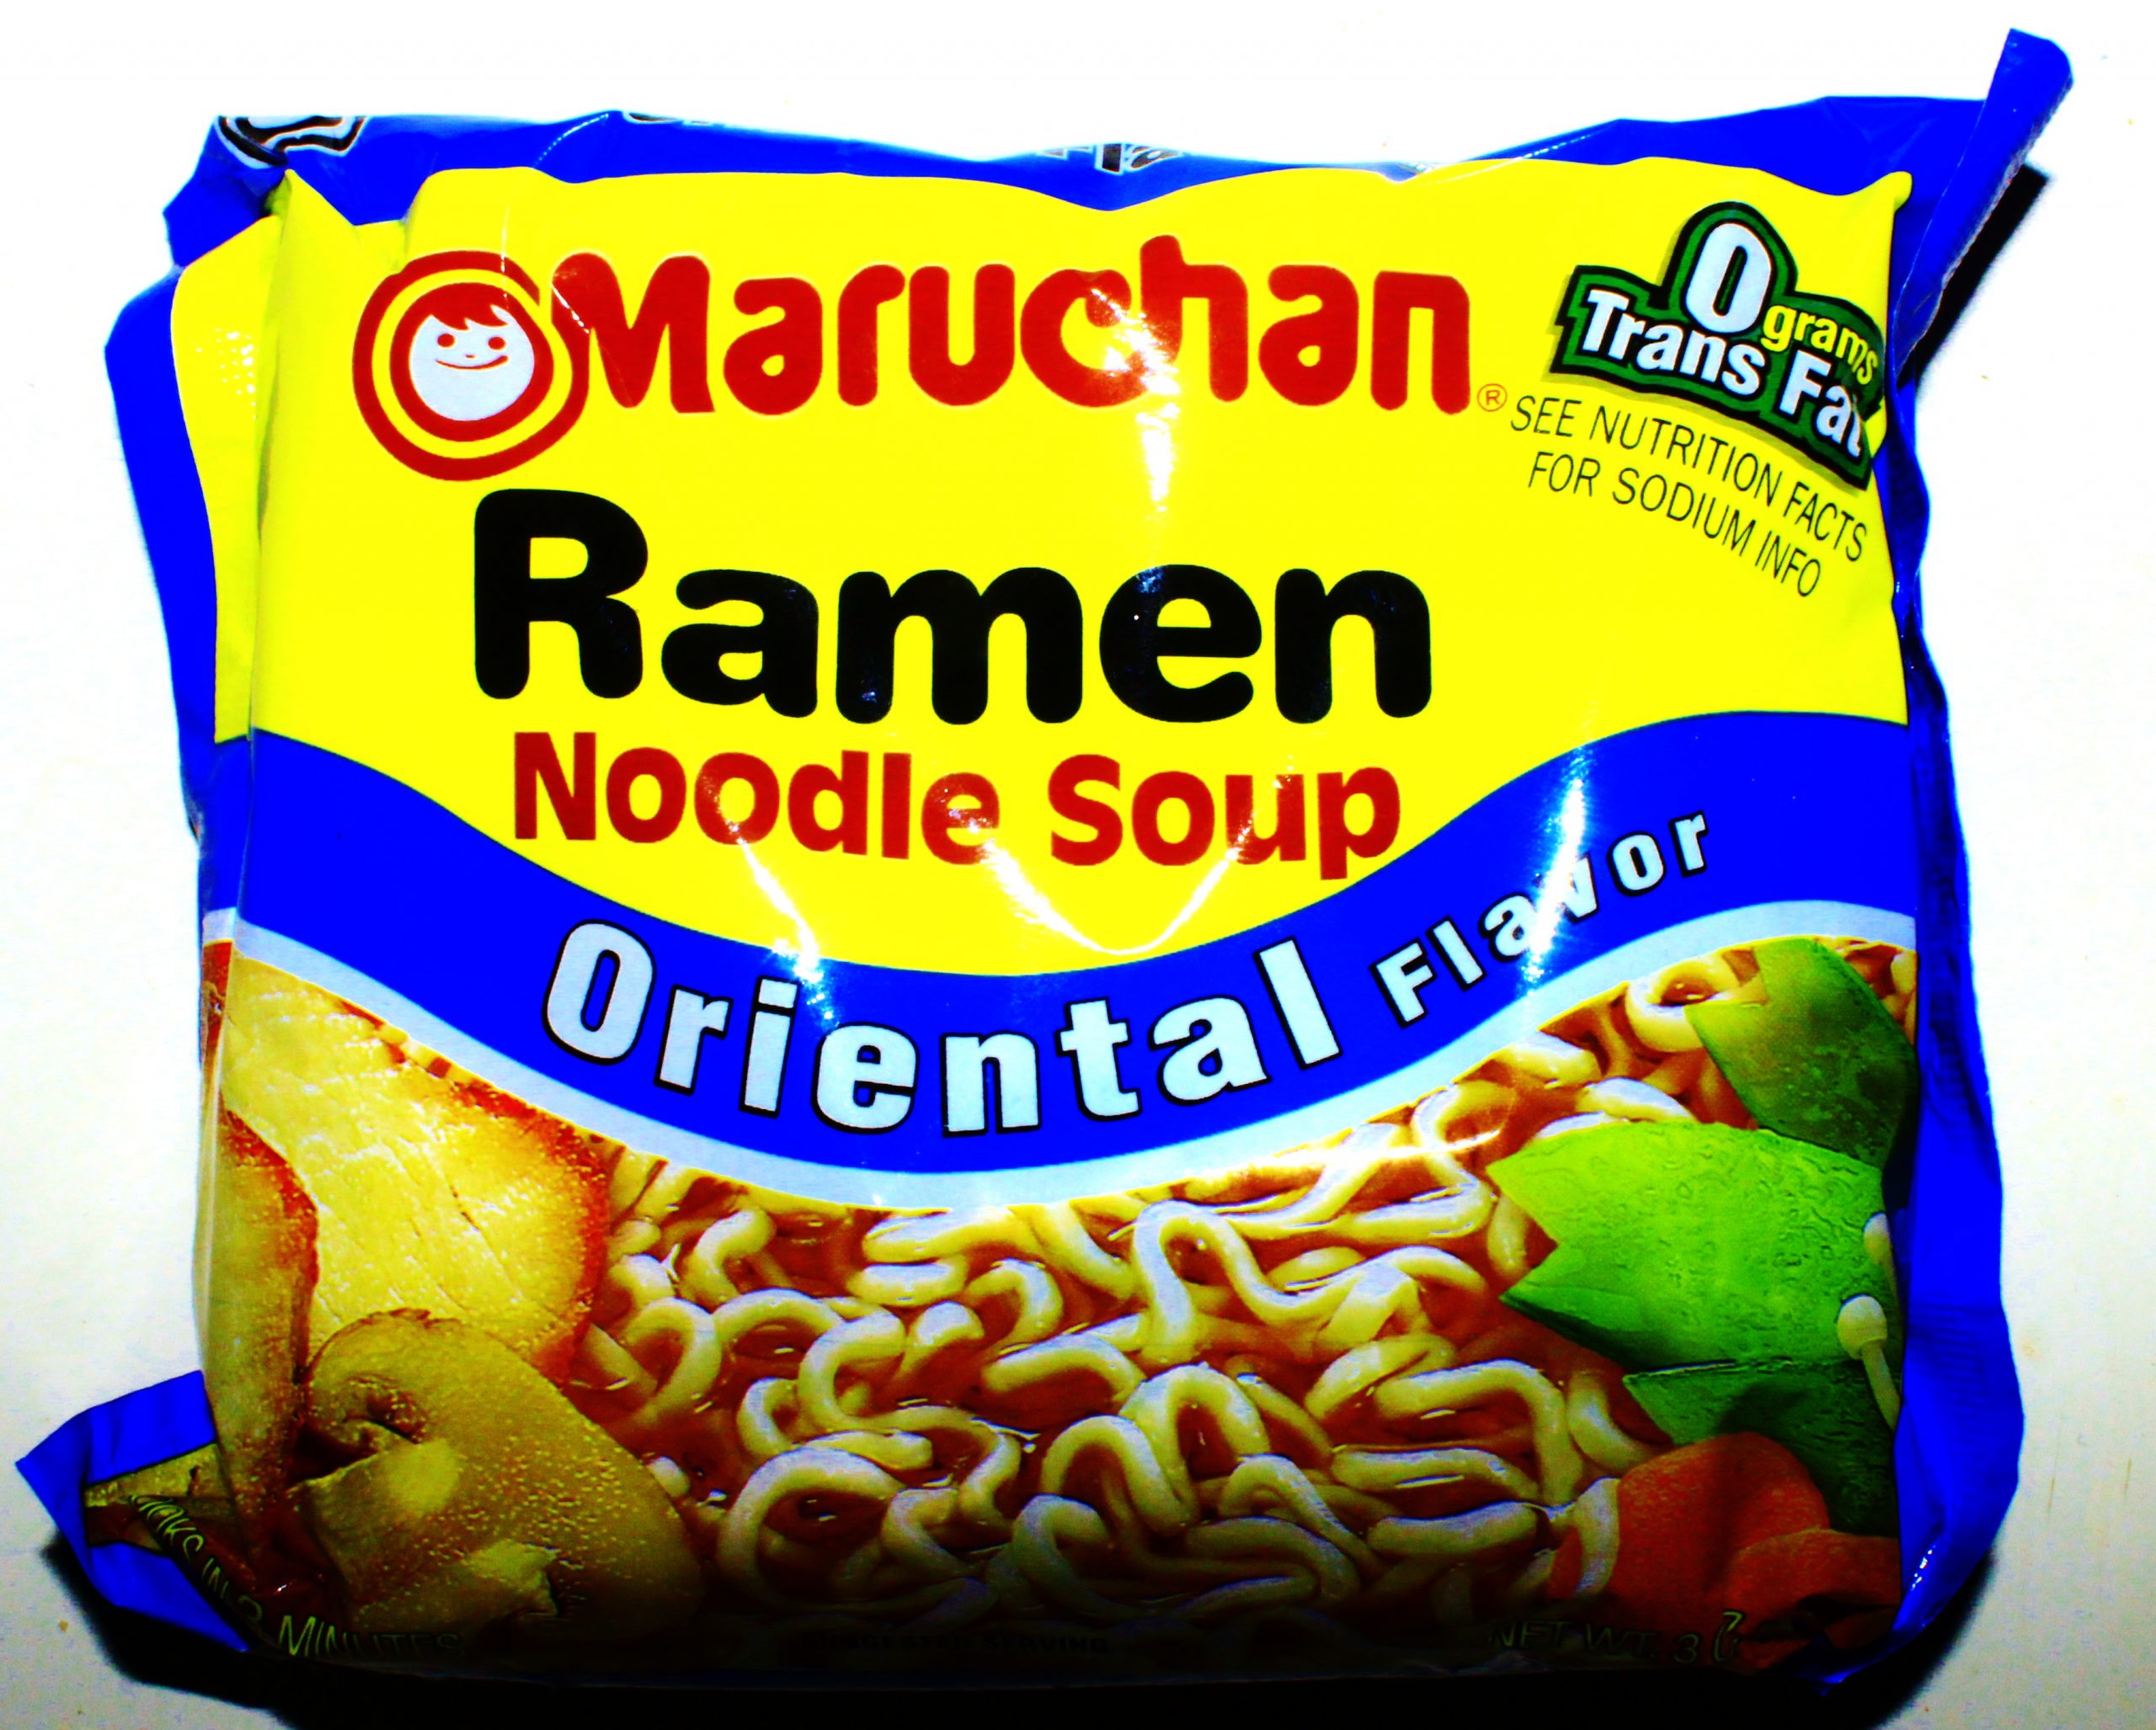 “Ramen Noodle Soup Oriental Flavor” from Bradley Gordon on Flickr is licensed under CC BY.